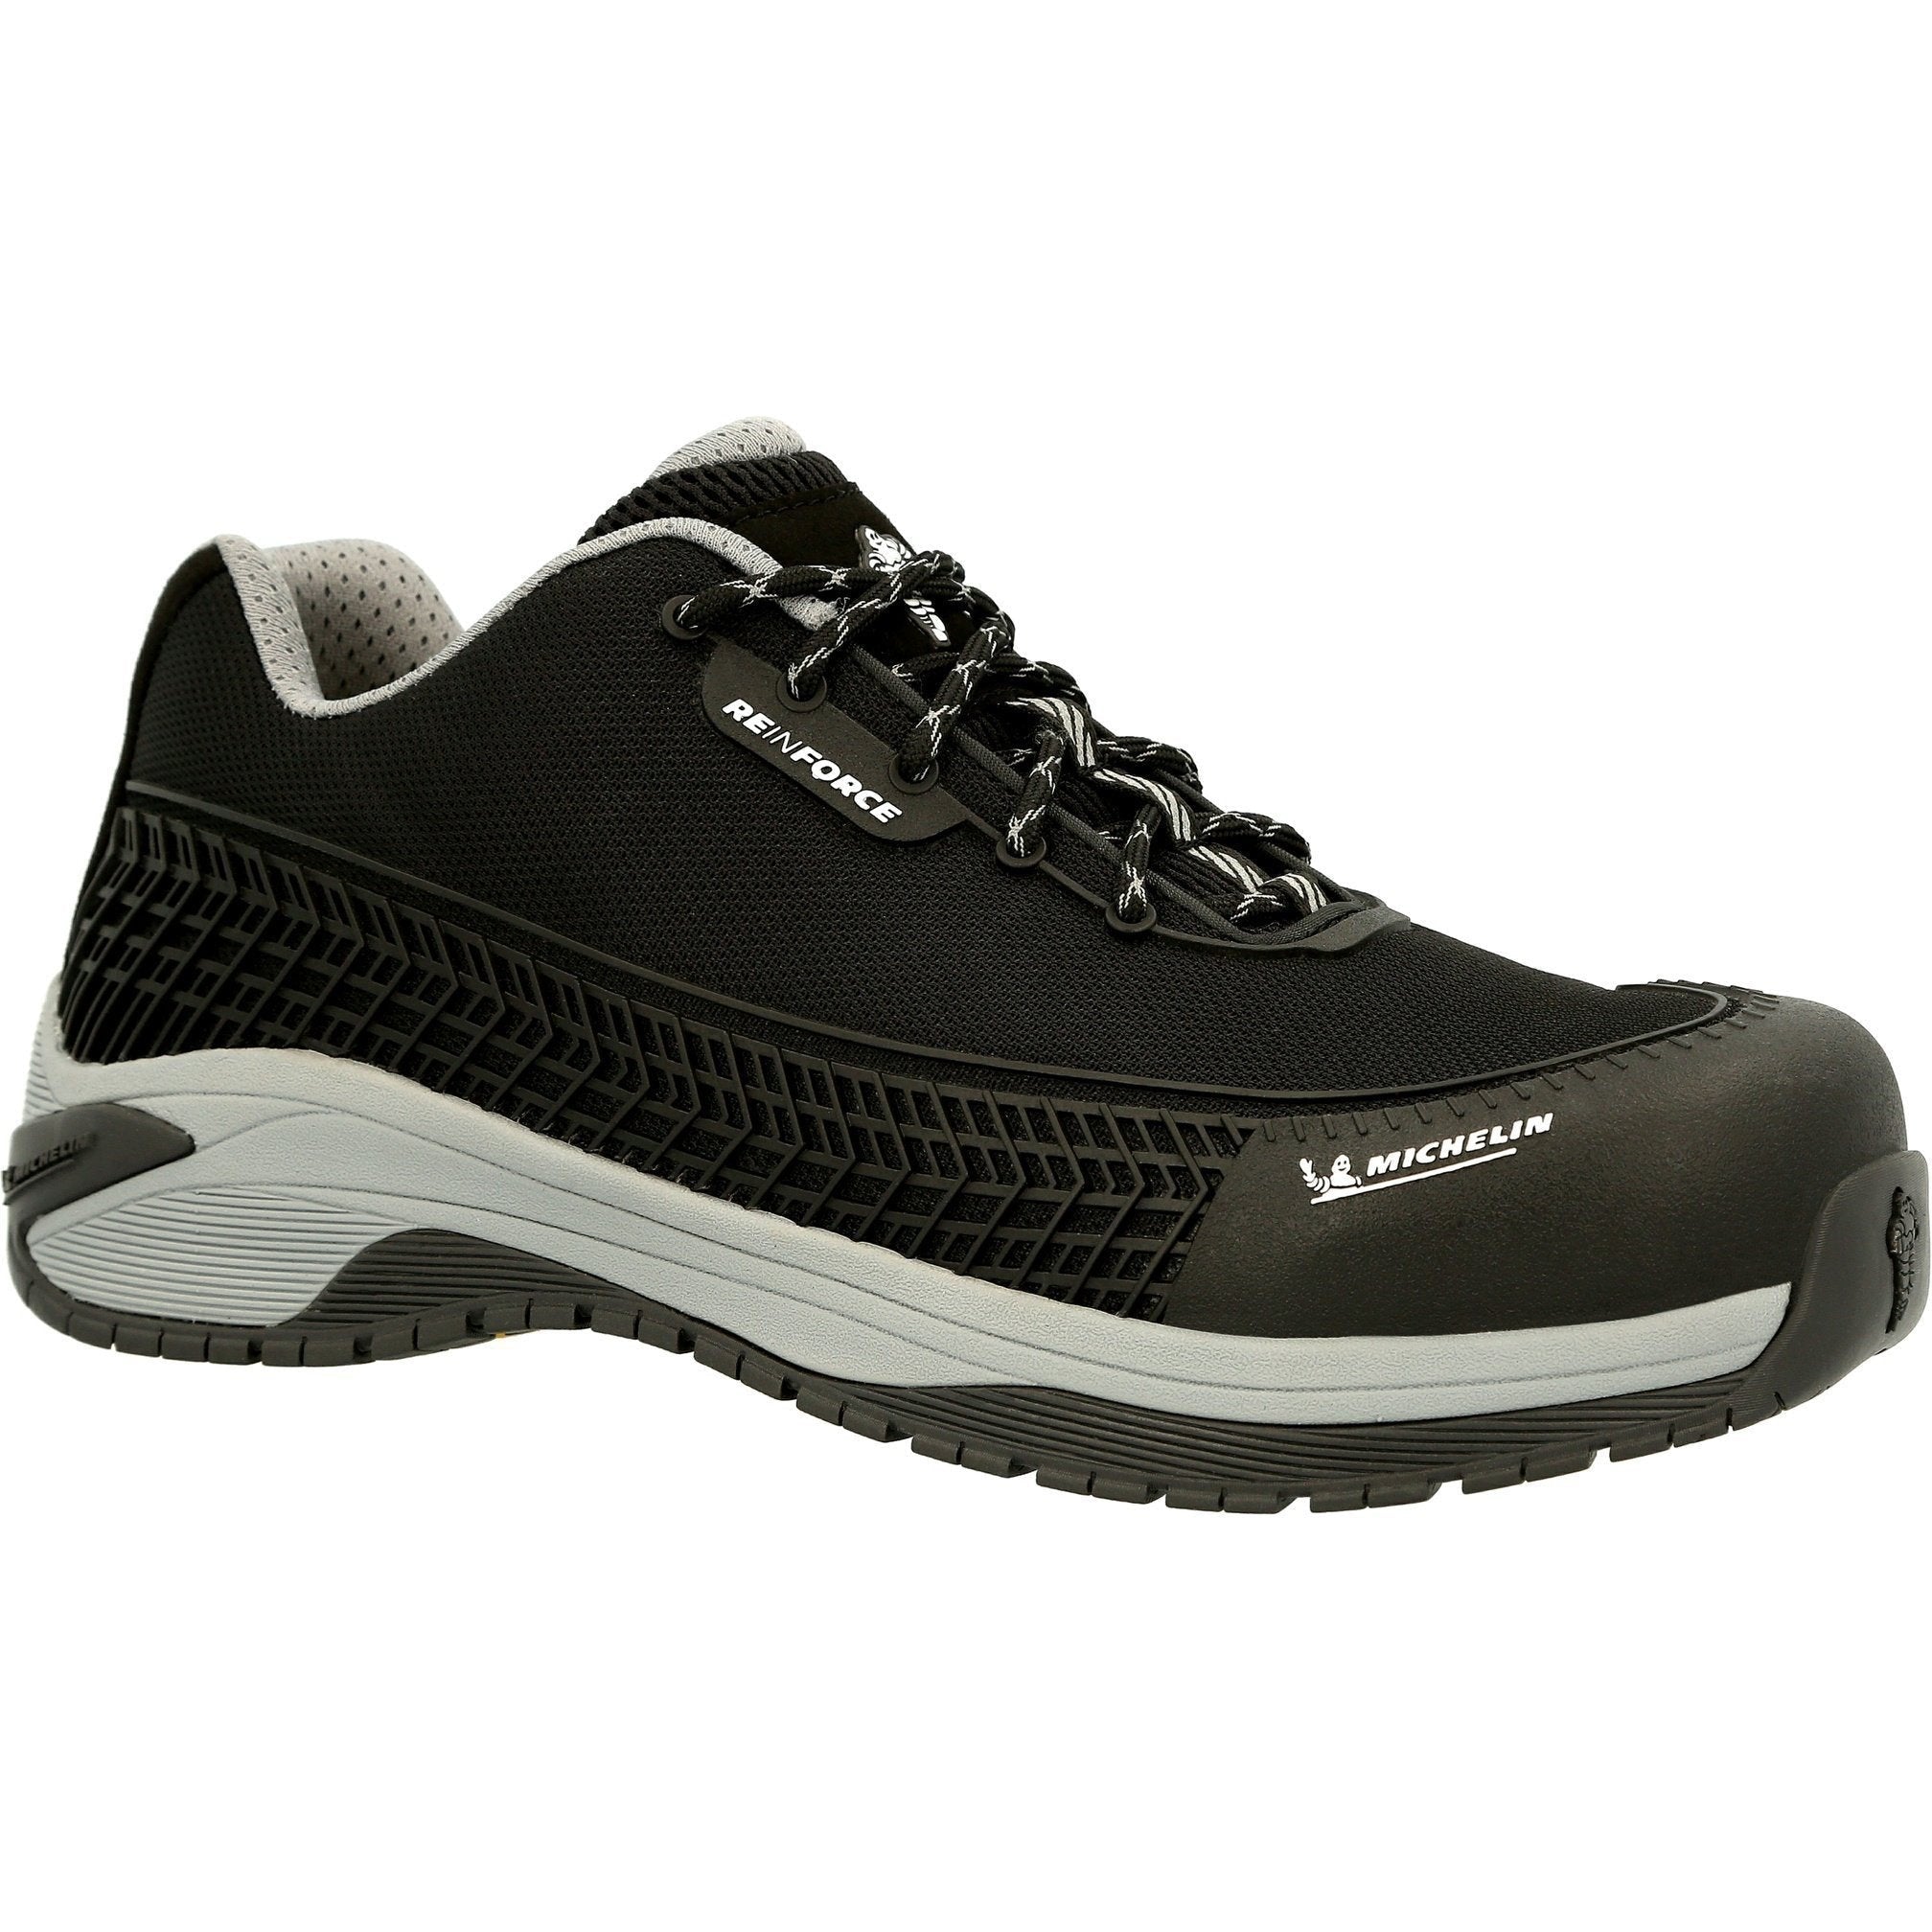 Michelin Men's Latitude Tour Alloy Toe Athletic Work Shoe Black MIC0003 8 / Medium / Black - Overlook Boots